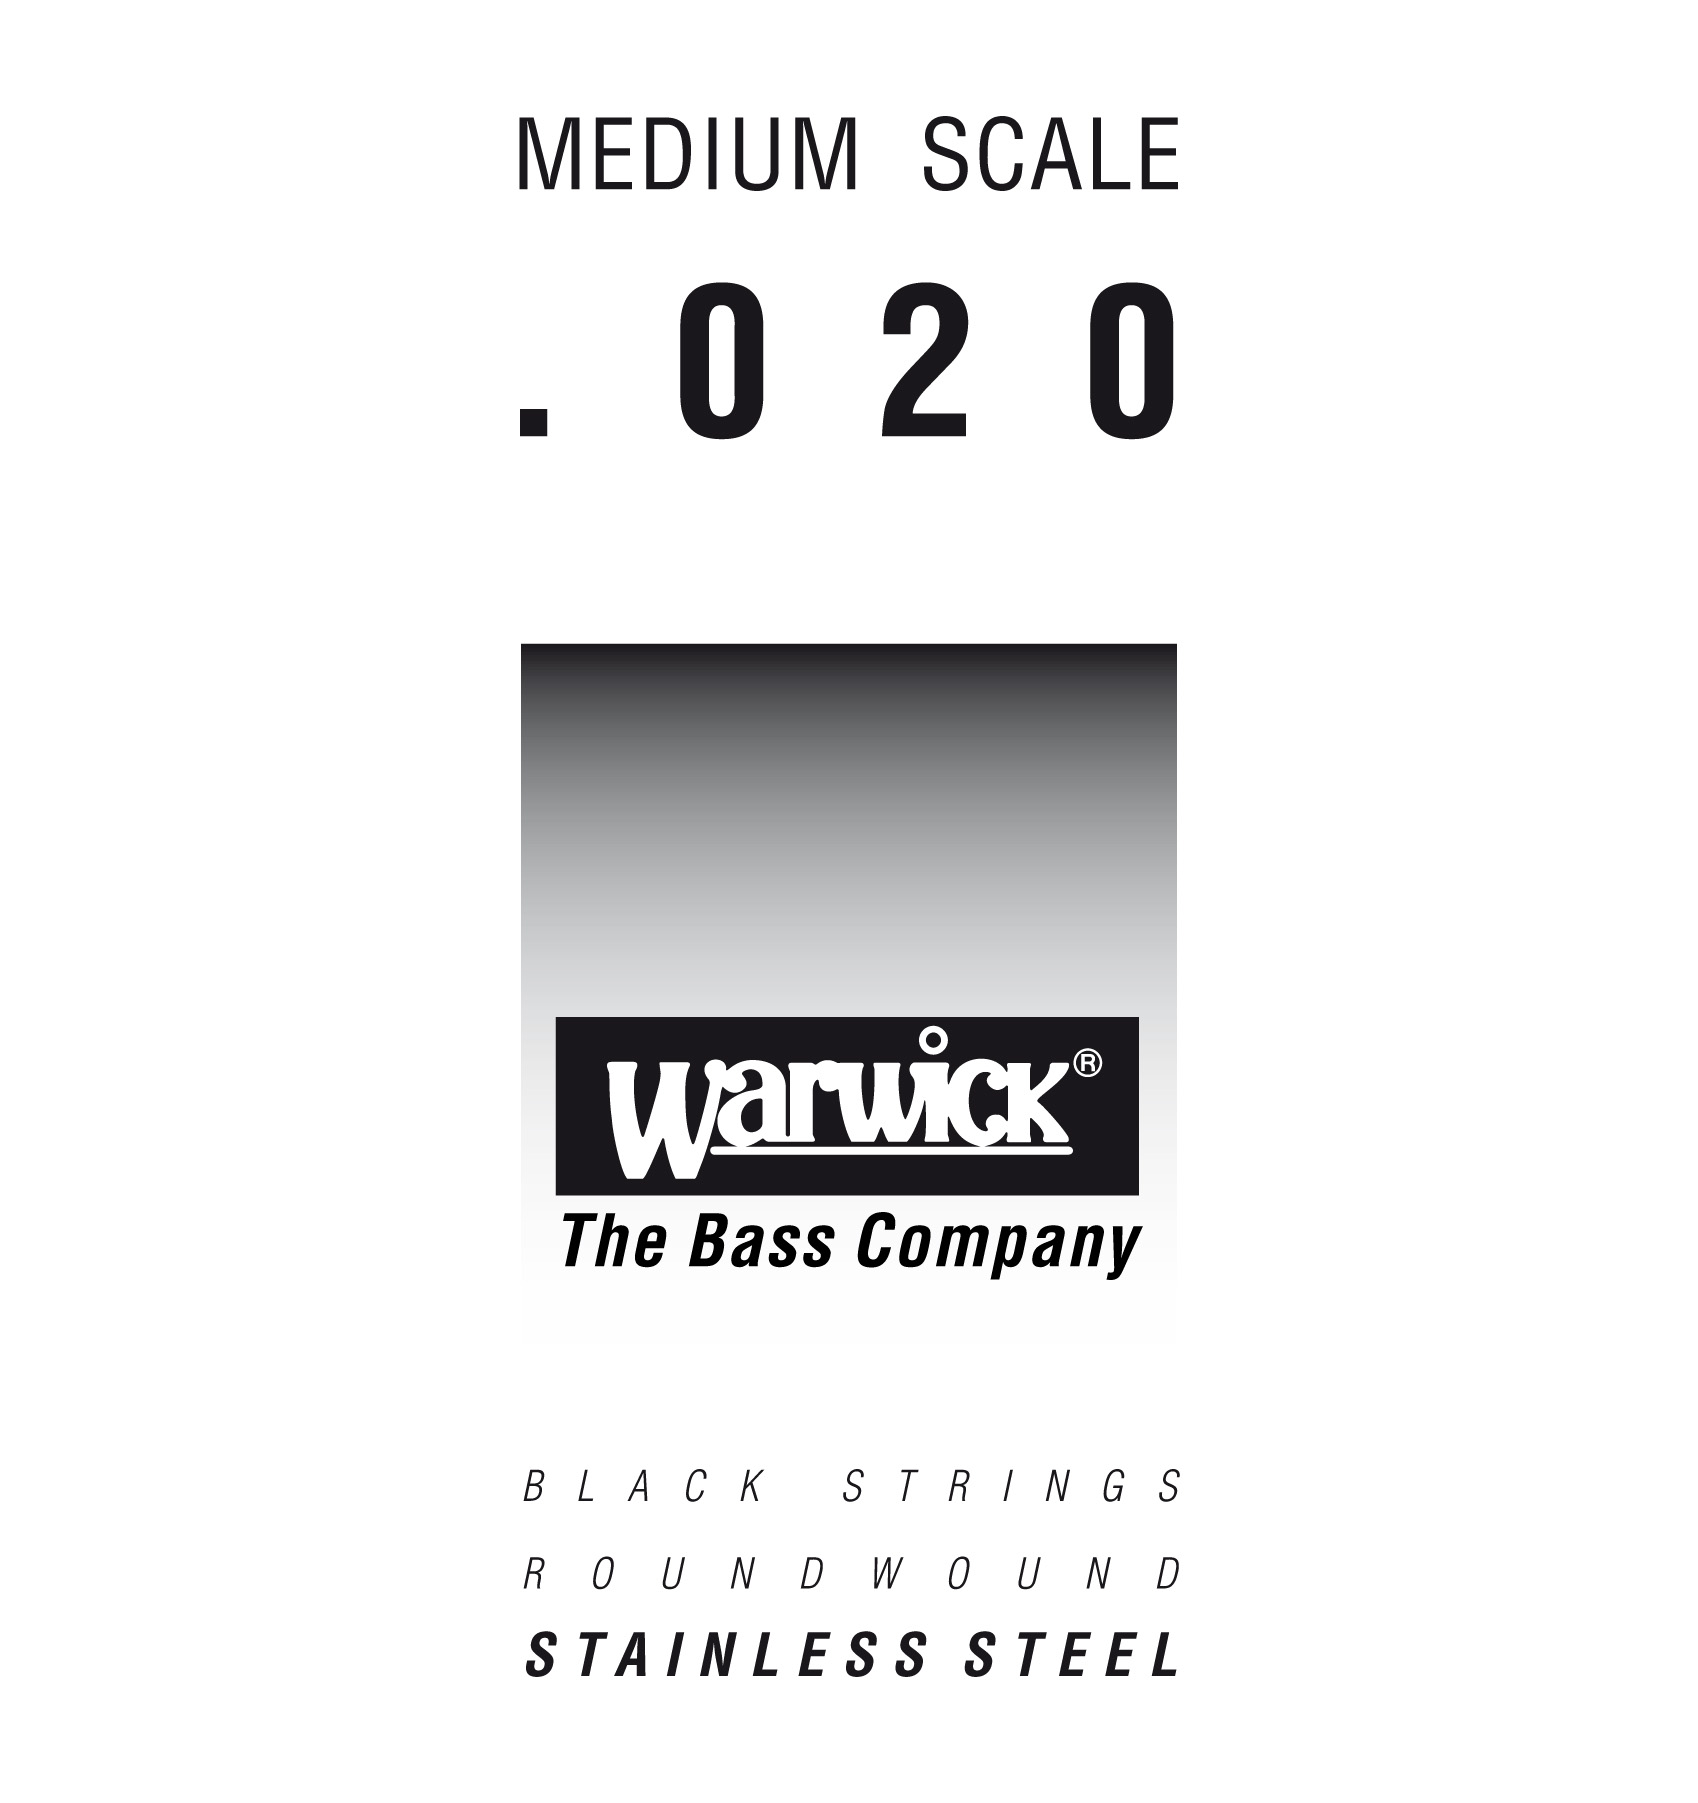 Warwick Black Label Bass Strings, Stainless Steel - Bass Single String, .020", Medium Scale